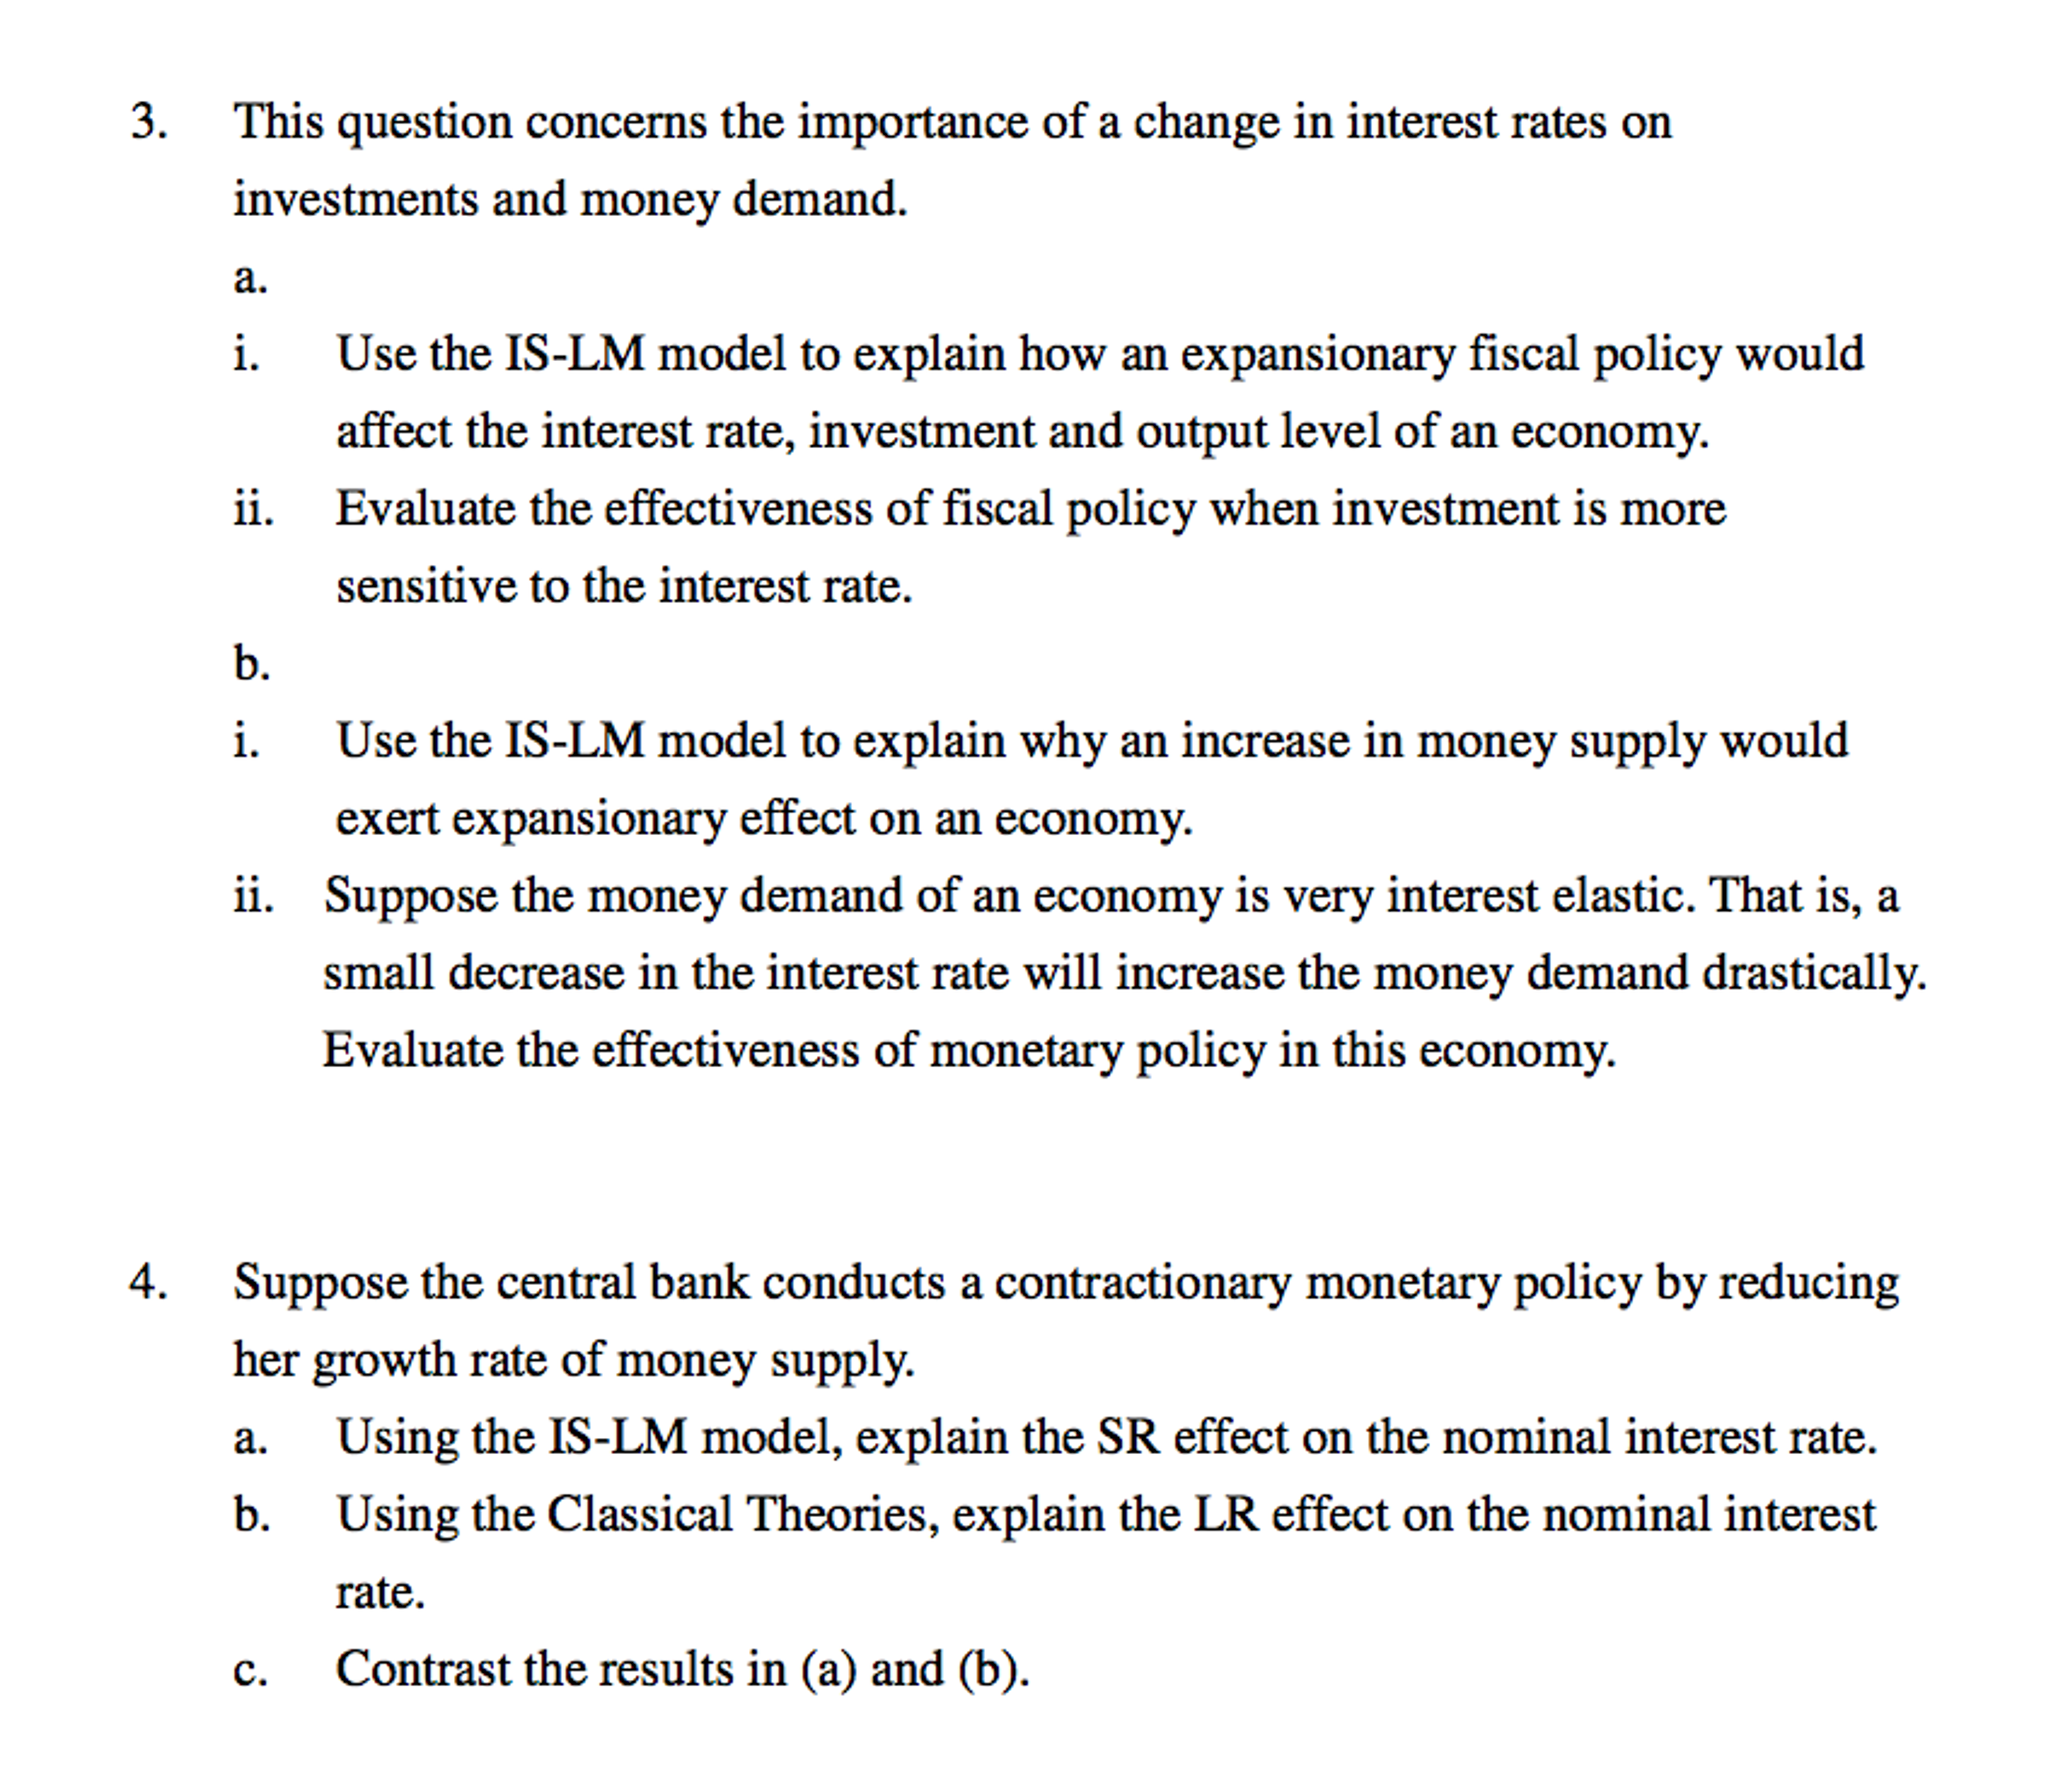 macroeconomics essay questions and answers pdf